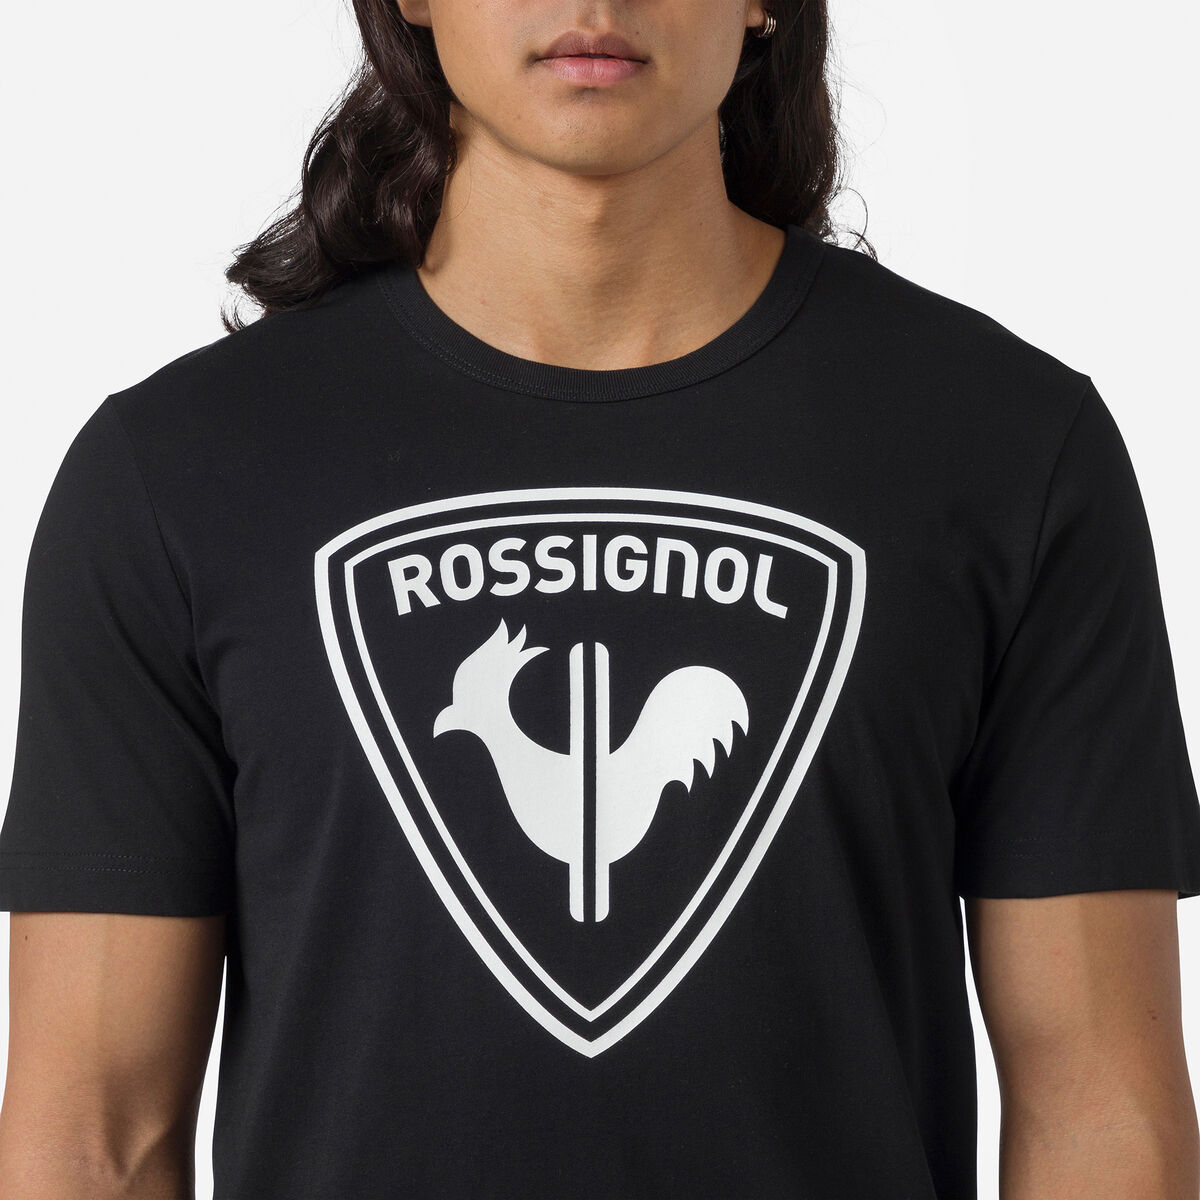 Rossignol T-shirt Logo Rossignol Homme black